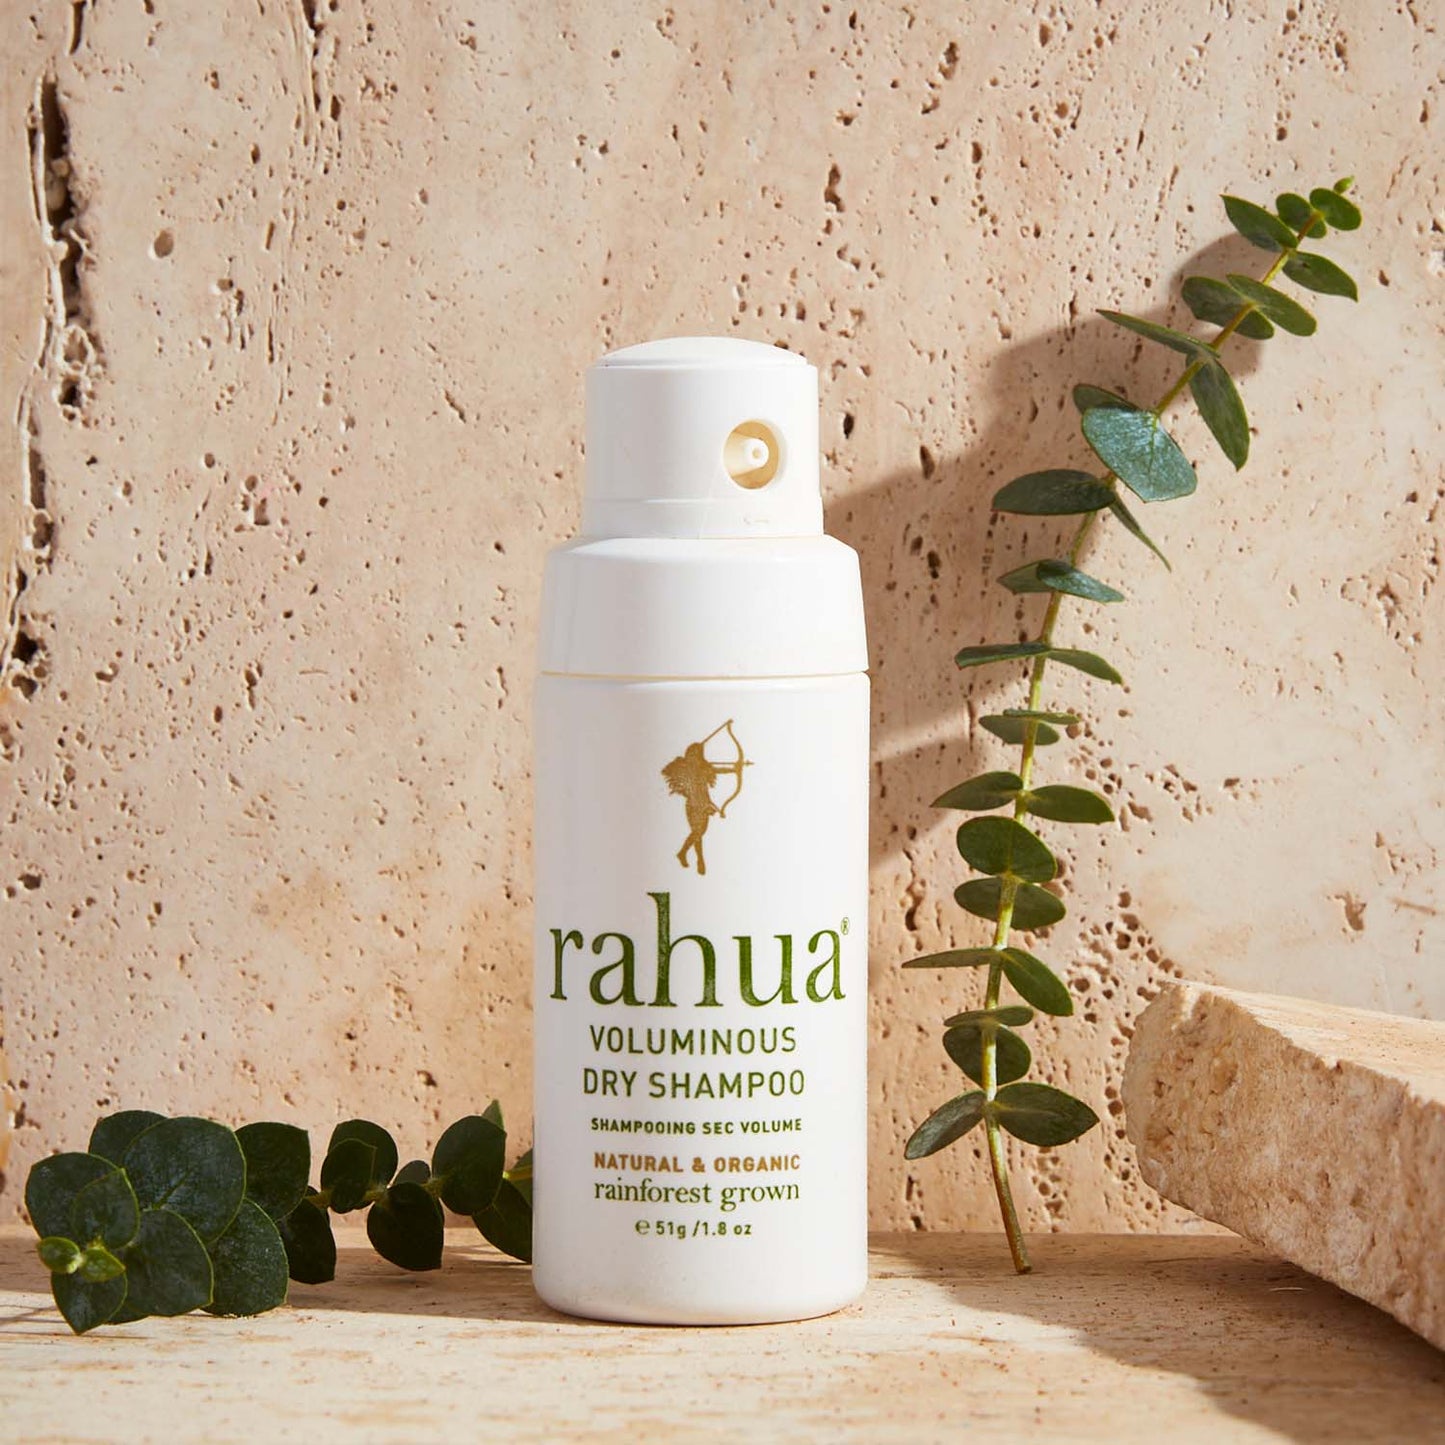 Rahua Voluminous Dry Shampoo Bottle with Eucalyptus Leaves